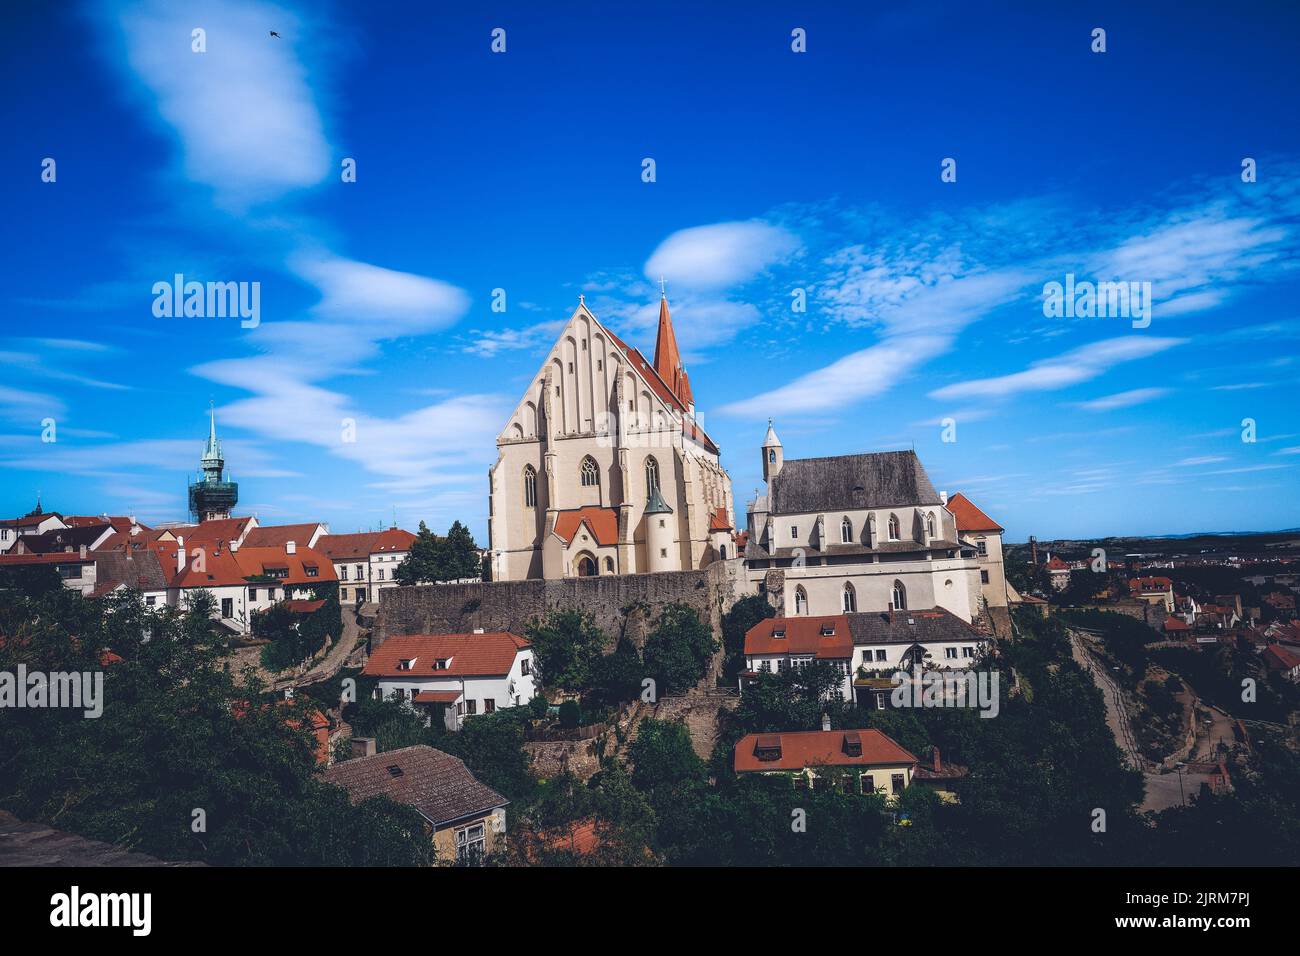 A beautiful shot of the town of Znojmo in Czech Republic Stock Photo